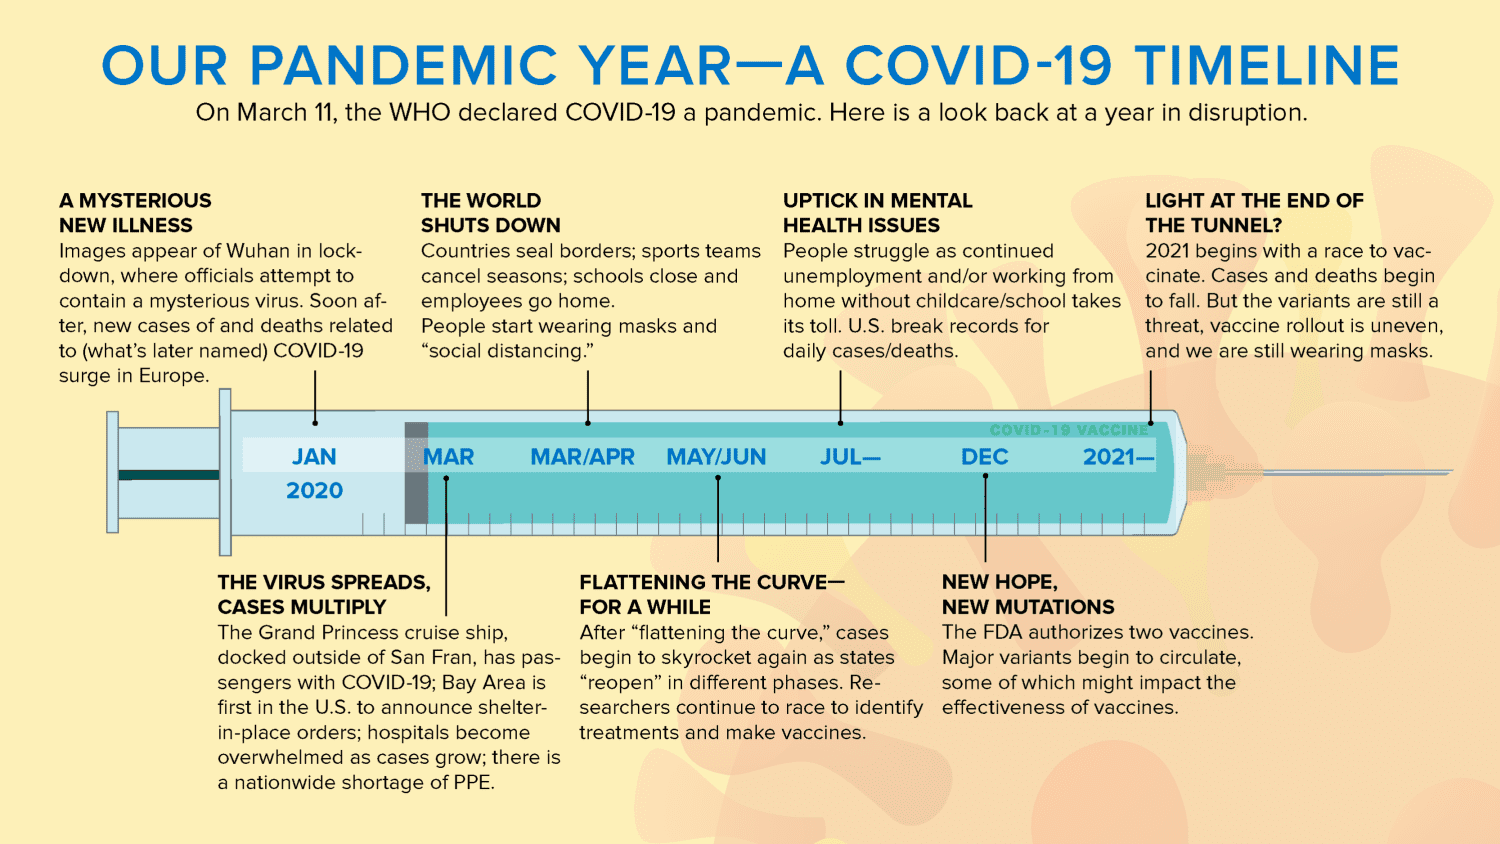 COVID-19 Coronavirus - Flattening the Curve